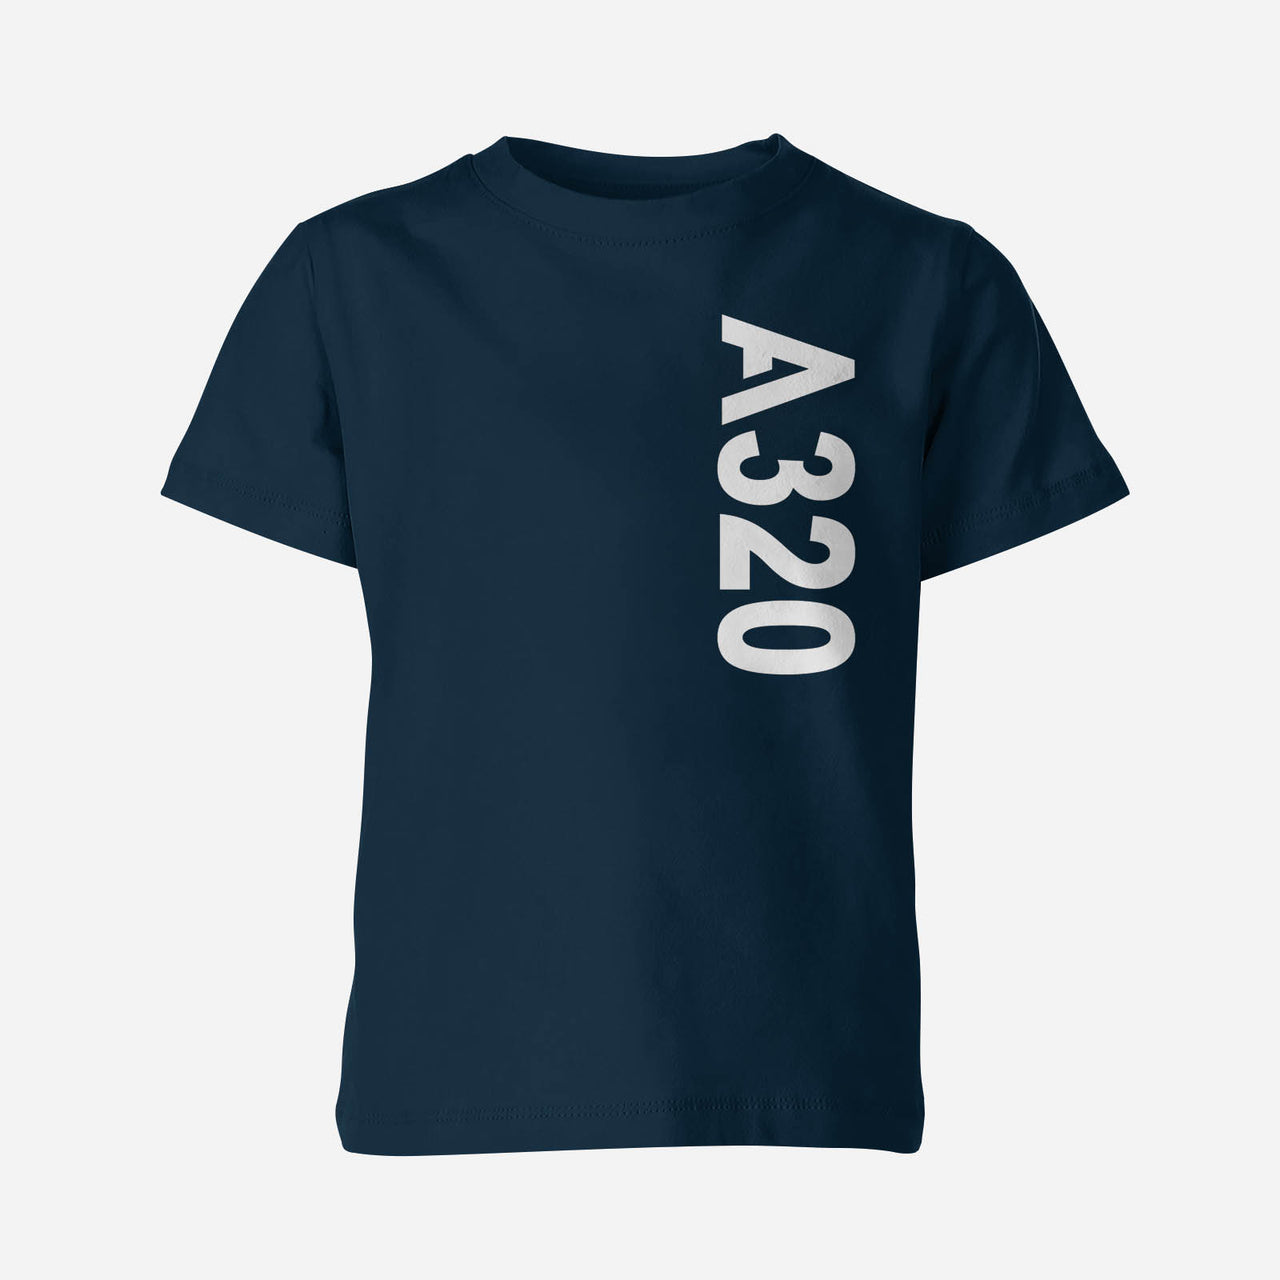 A320 Side Text Designed Children T-Shirts